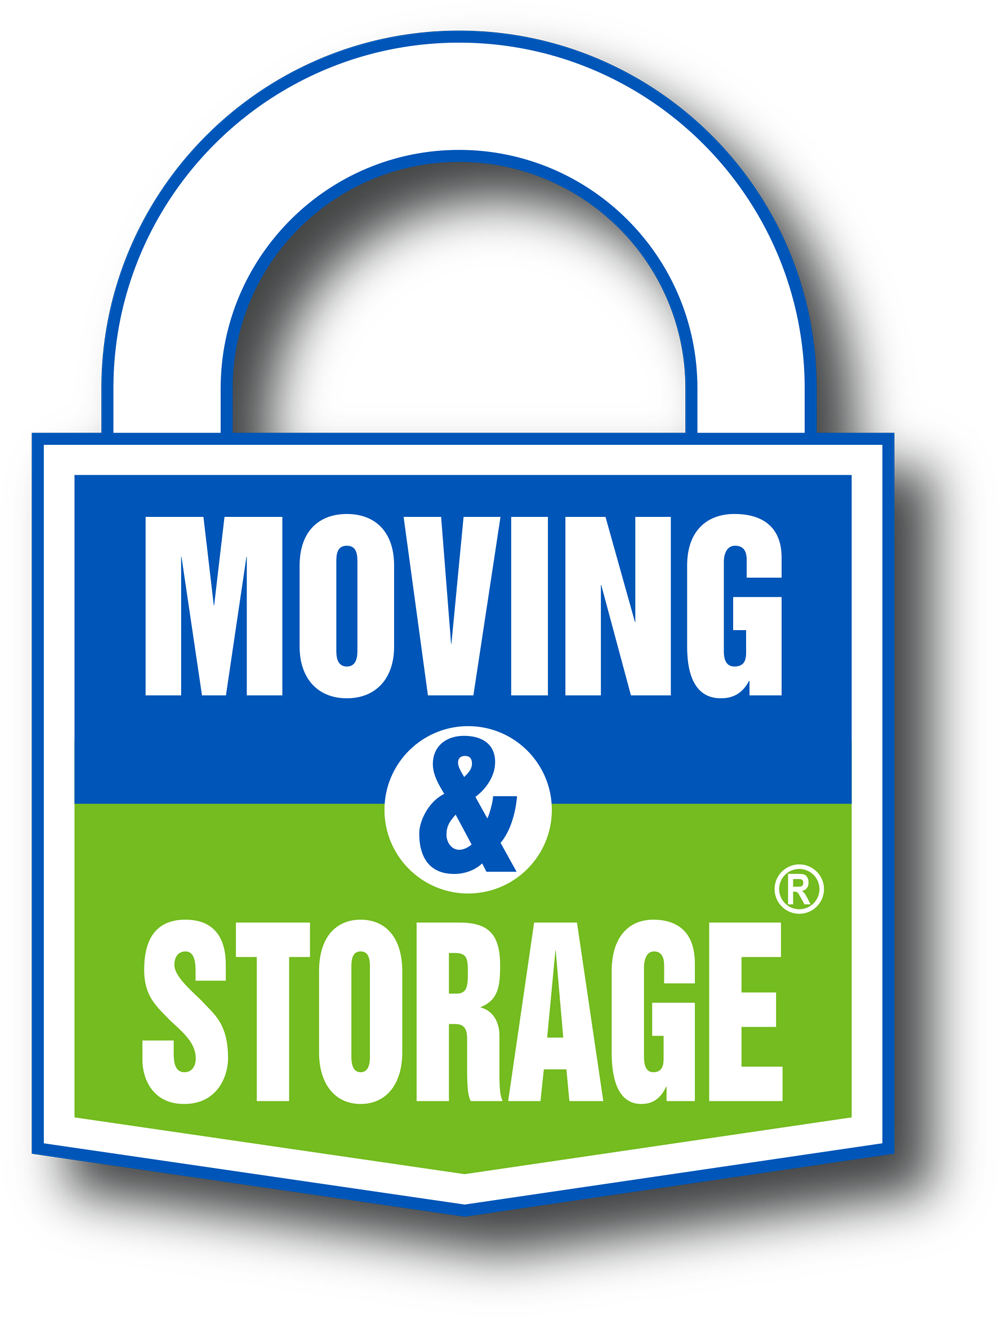 Moving & Storage logo